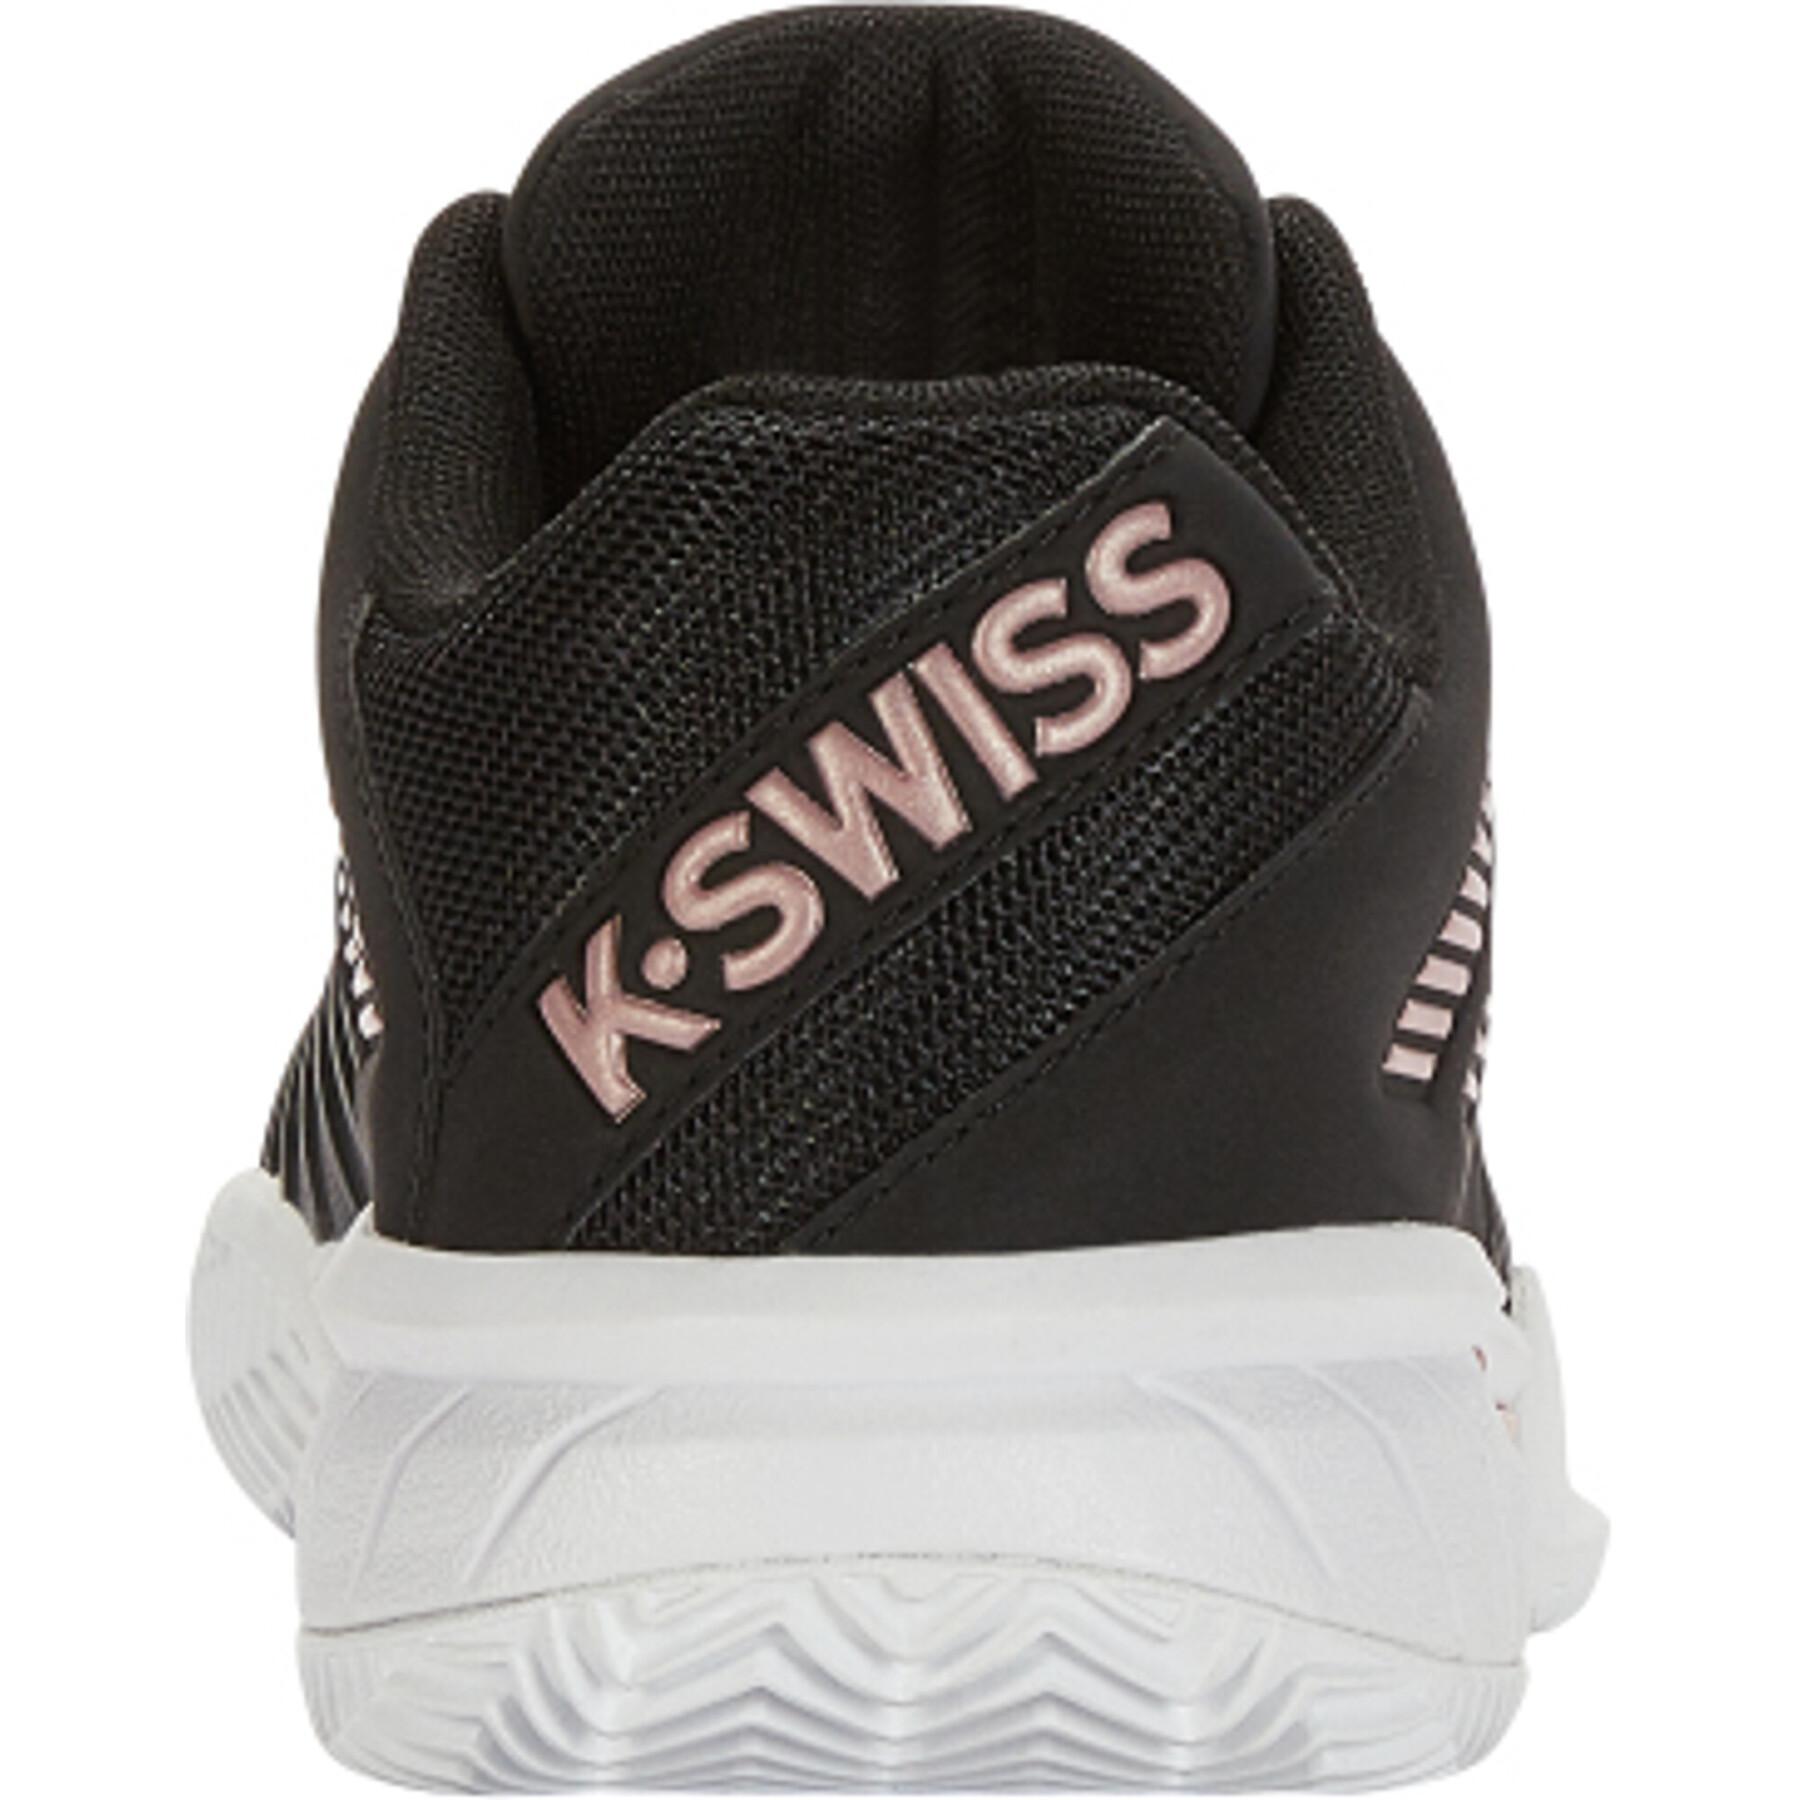 Zapatillas de tenis para mujer K-Swiss Express Light 3 Hb